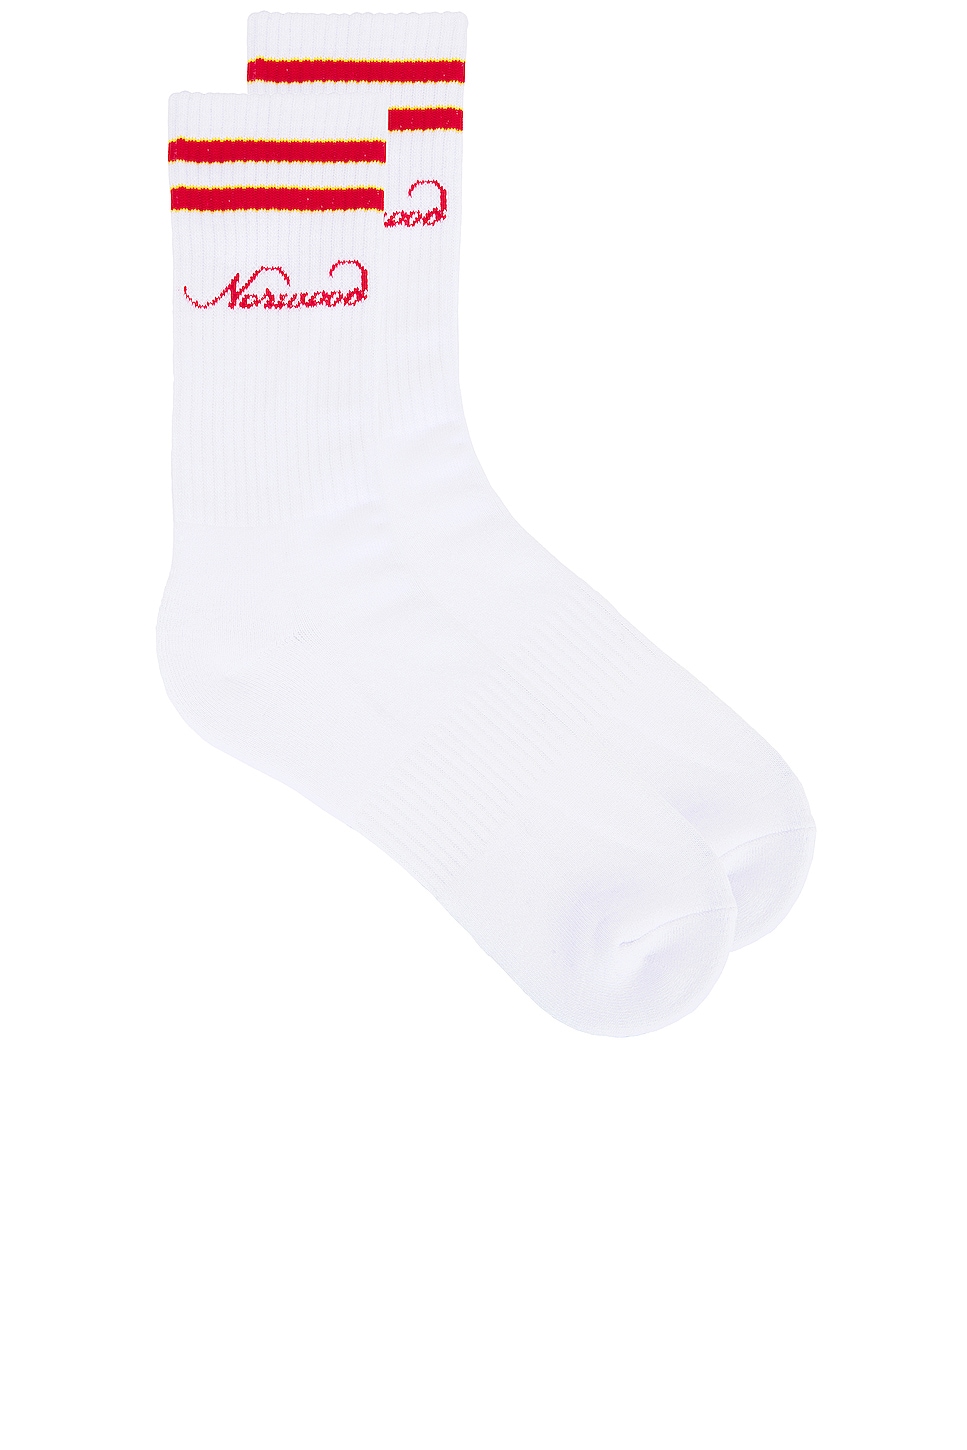 Signature Socks in White